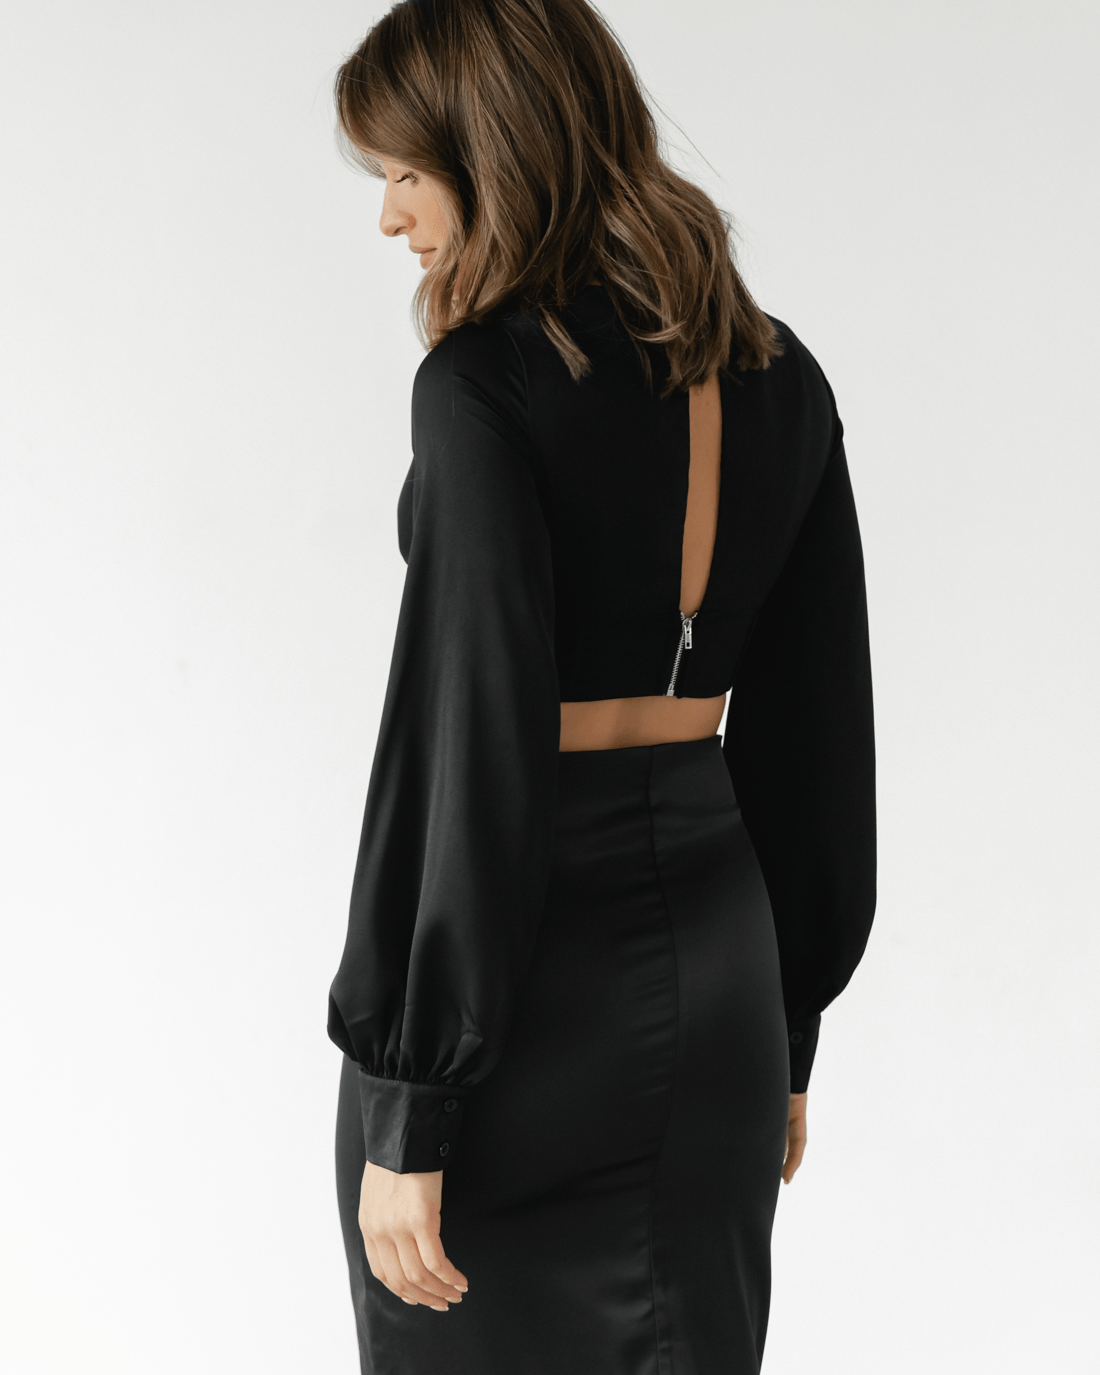 Devera Long Sleeve Top (Black) - Black Long Sleeve Top - Women's Top - Charcoal Clothing